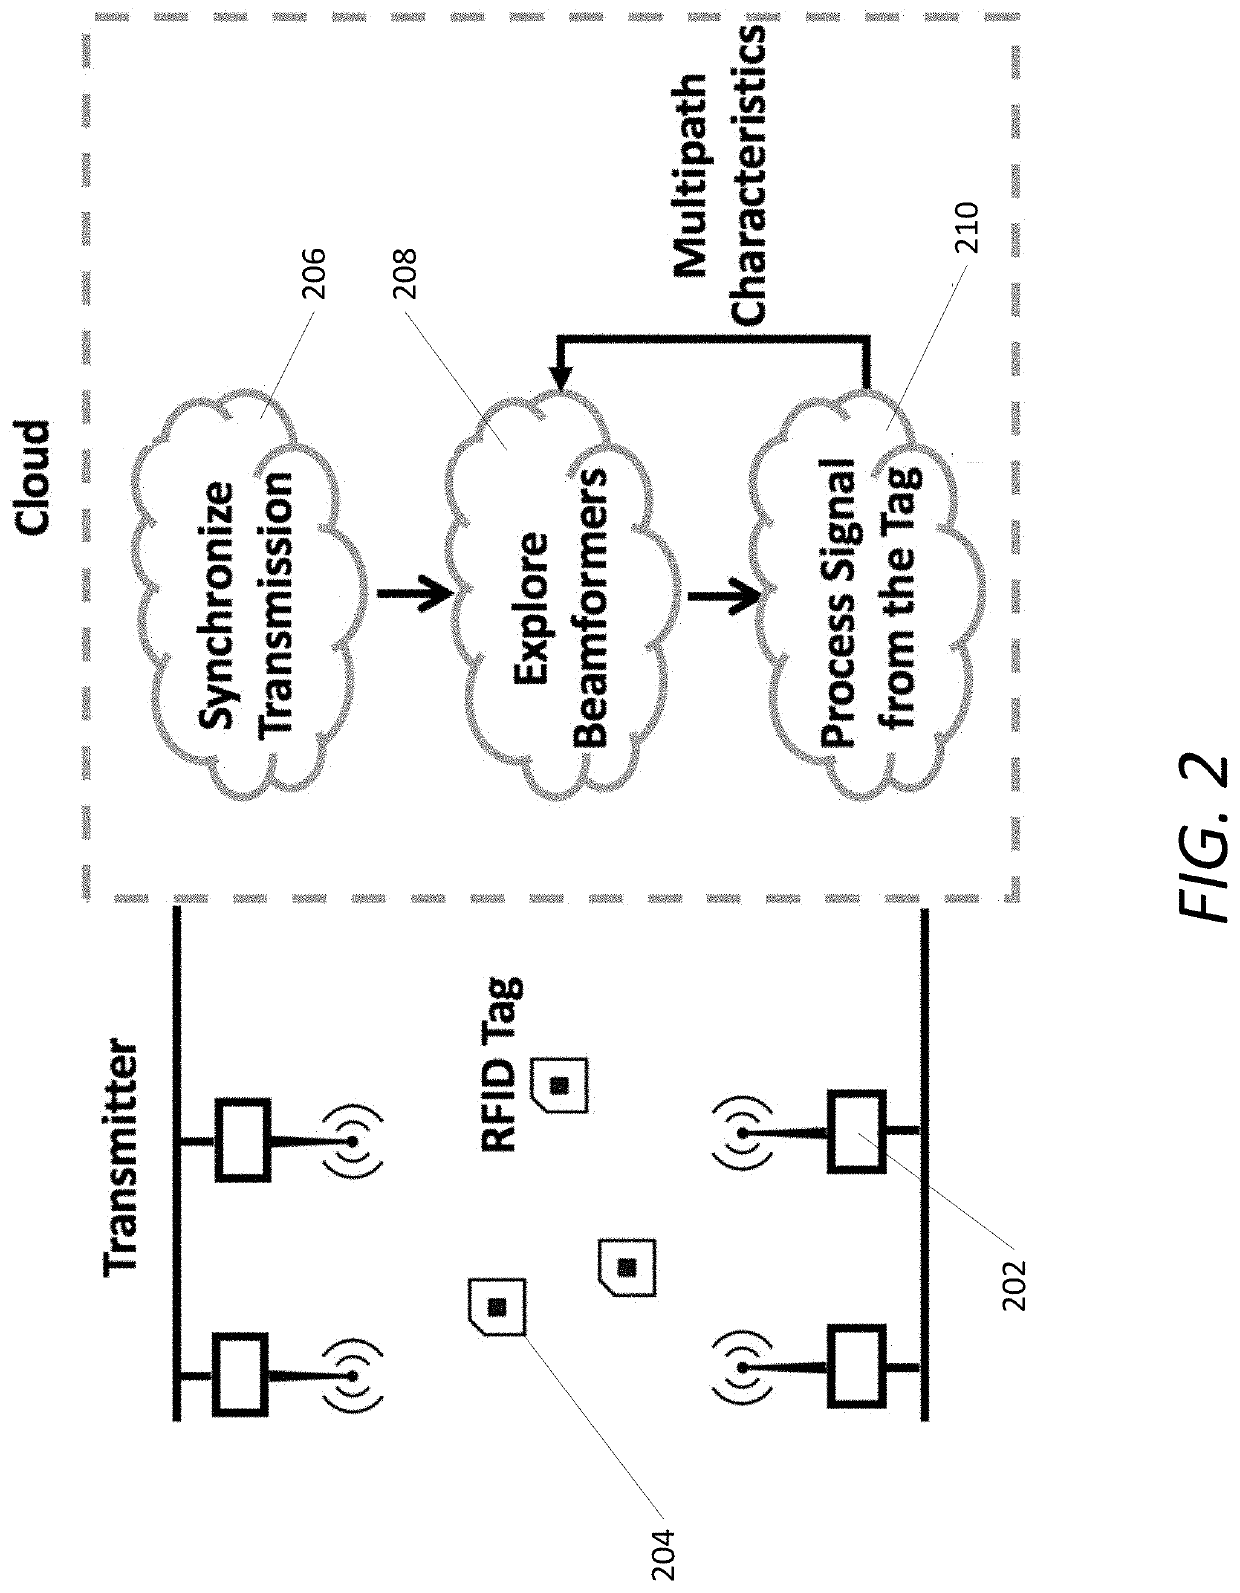 Method for extending the range of commercial passive RFID elements